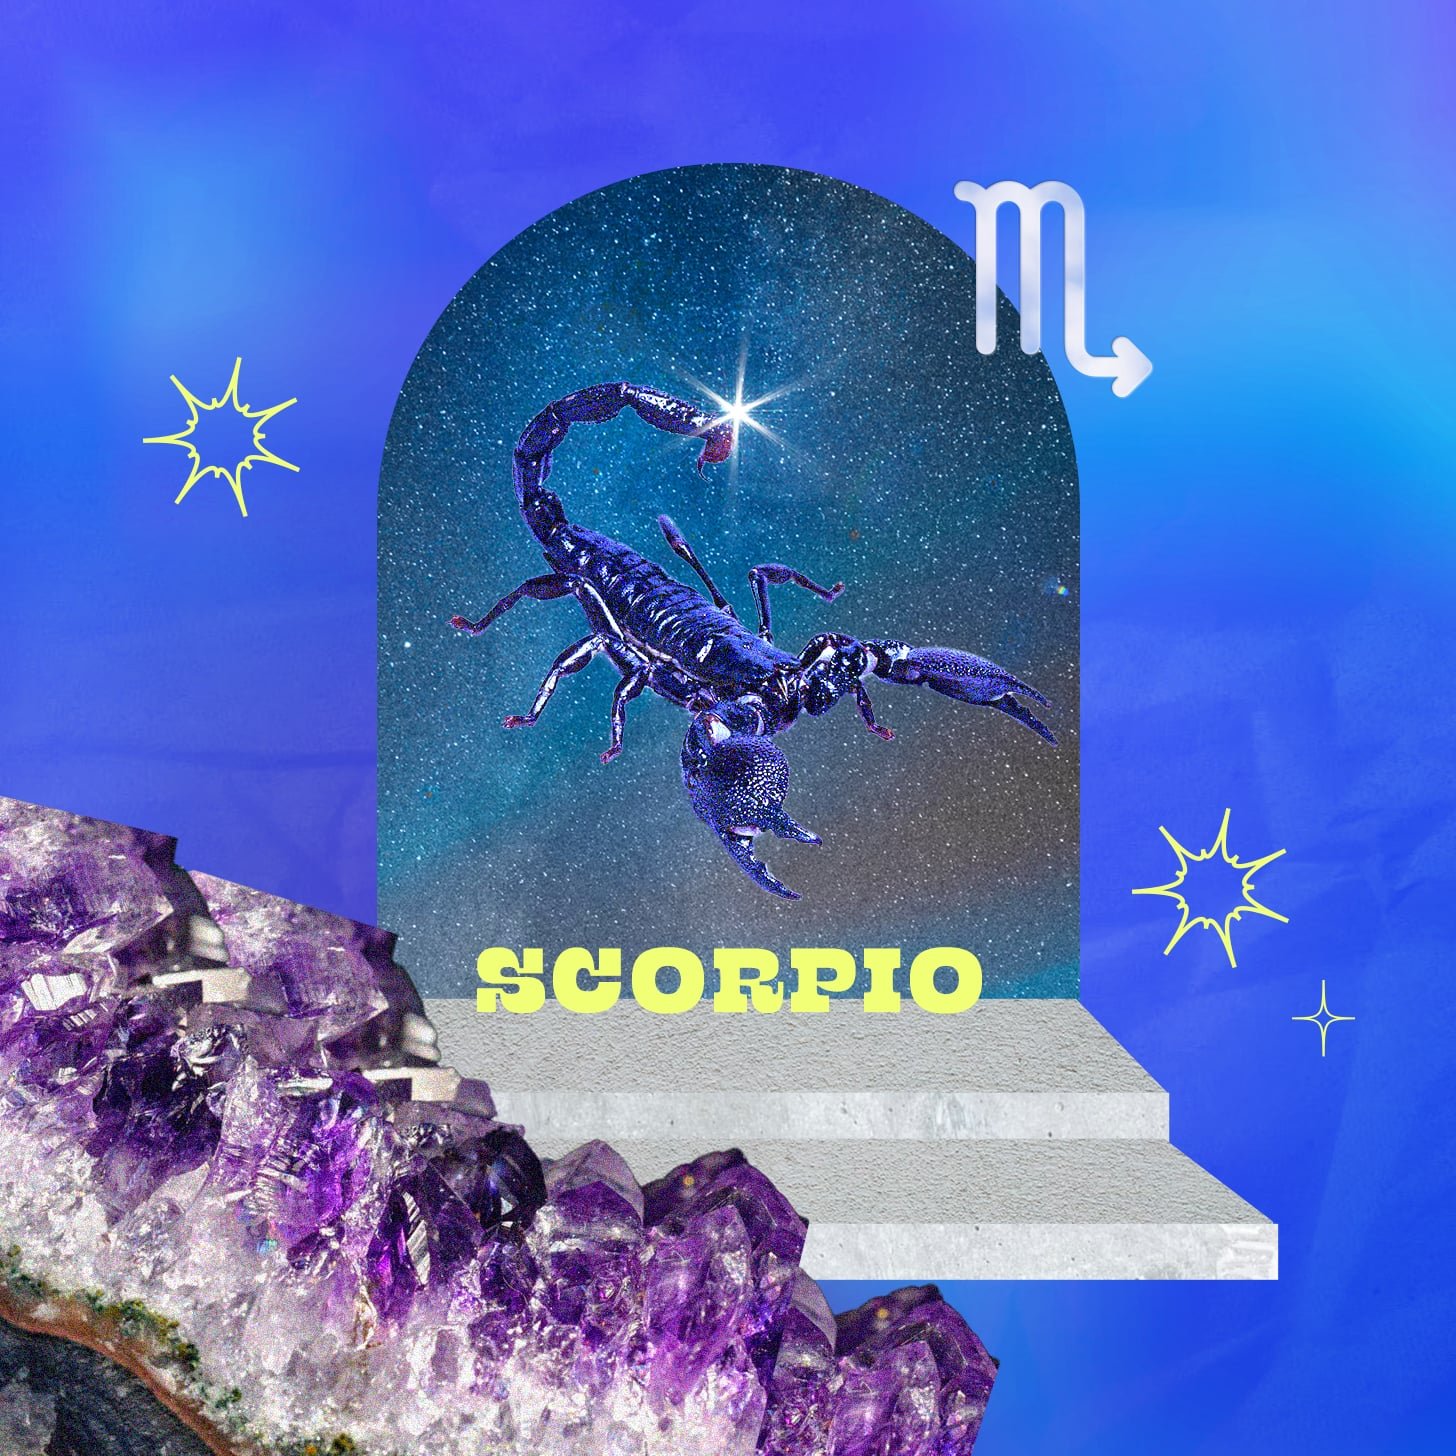 Scorpio weekly horoscope for December 11, 2022